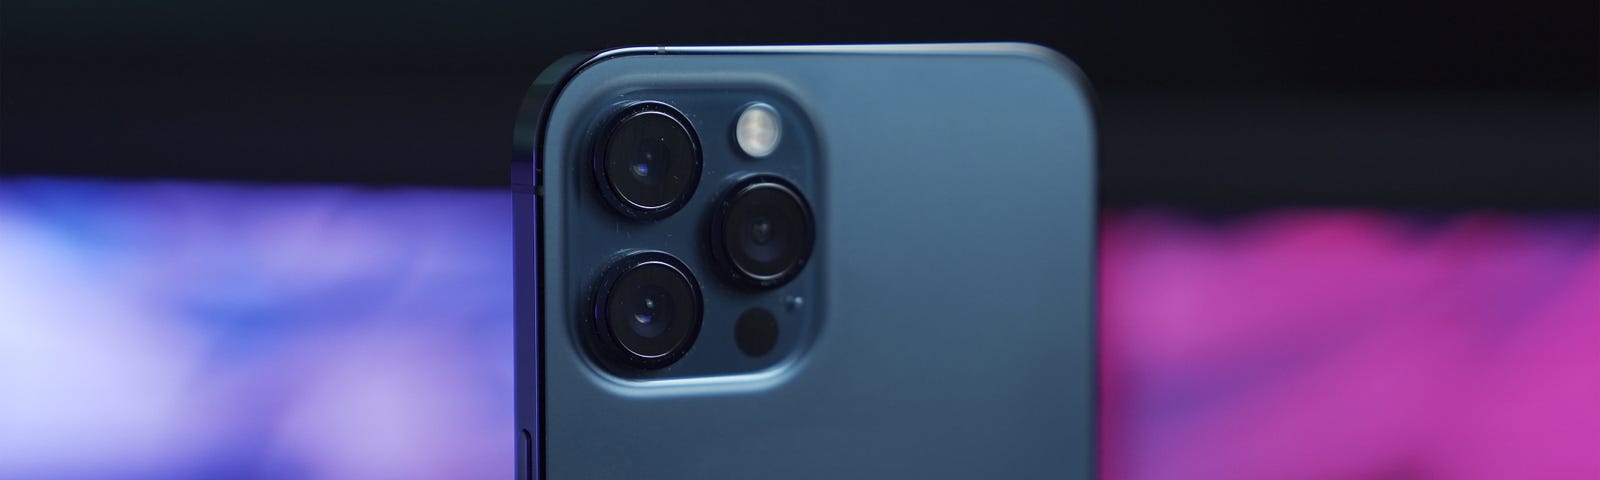 iPhone 12 Pro cameras close up